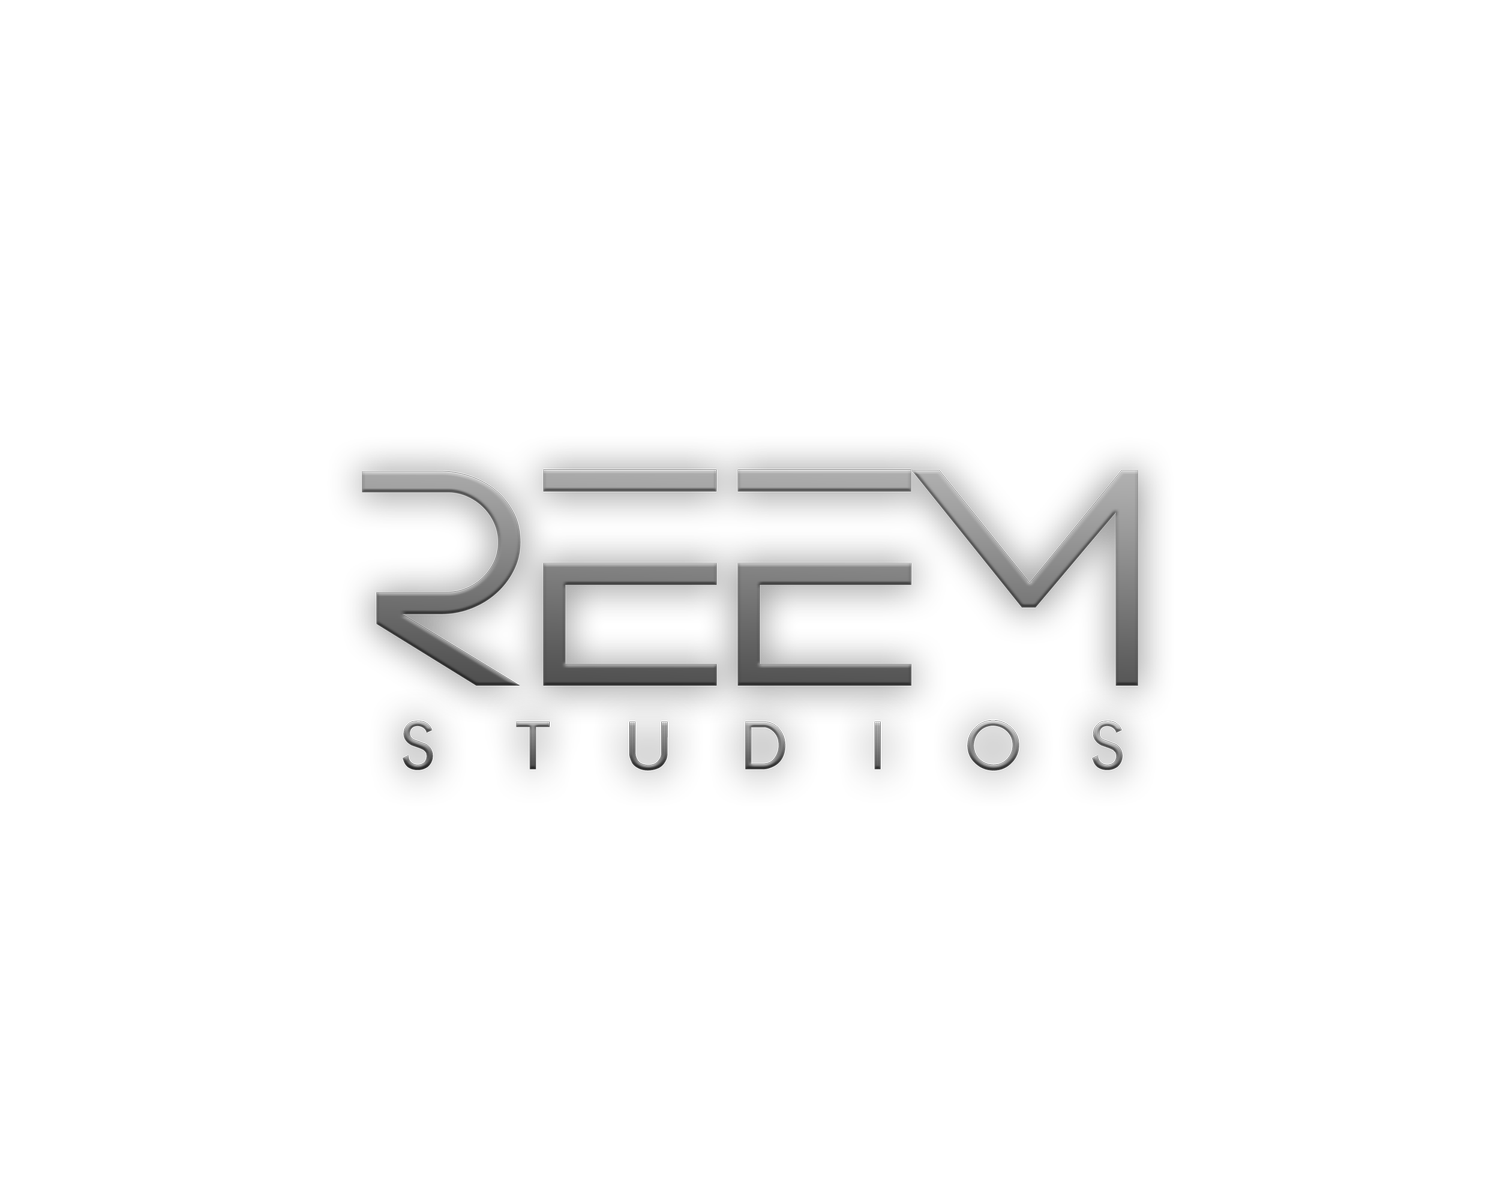 REEM Studios